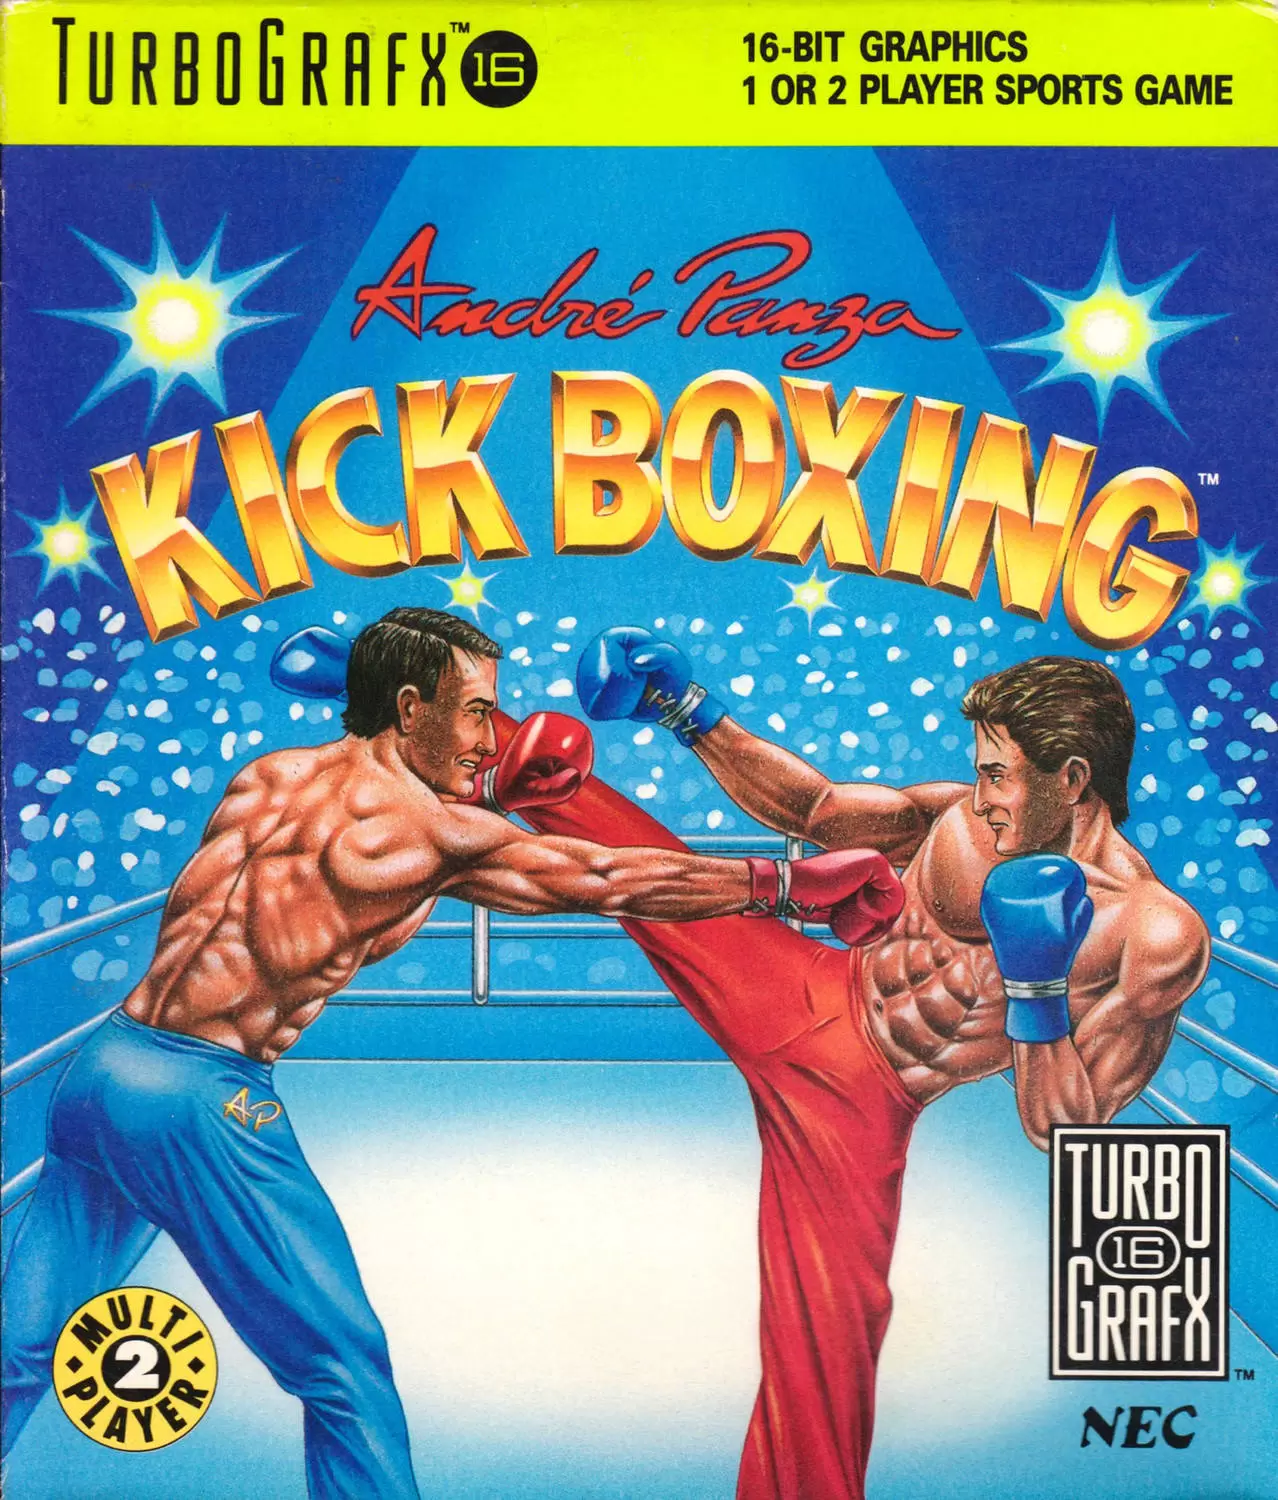 Turbo Grafx 16 - Andre Panza Kick Boxing